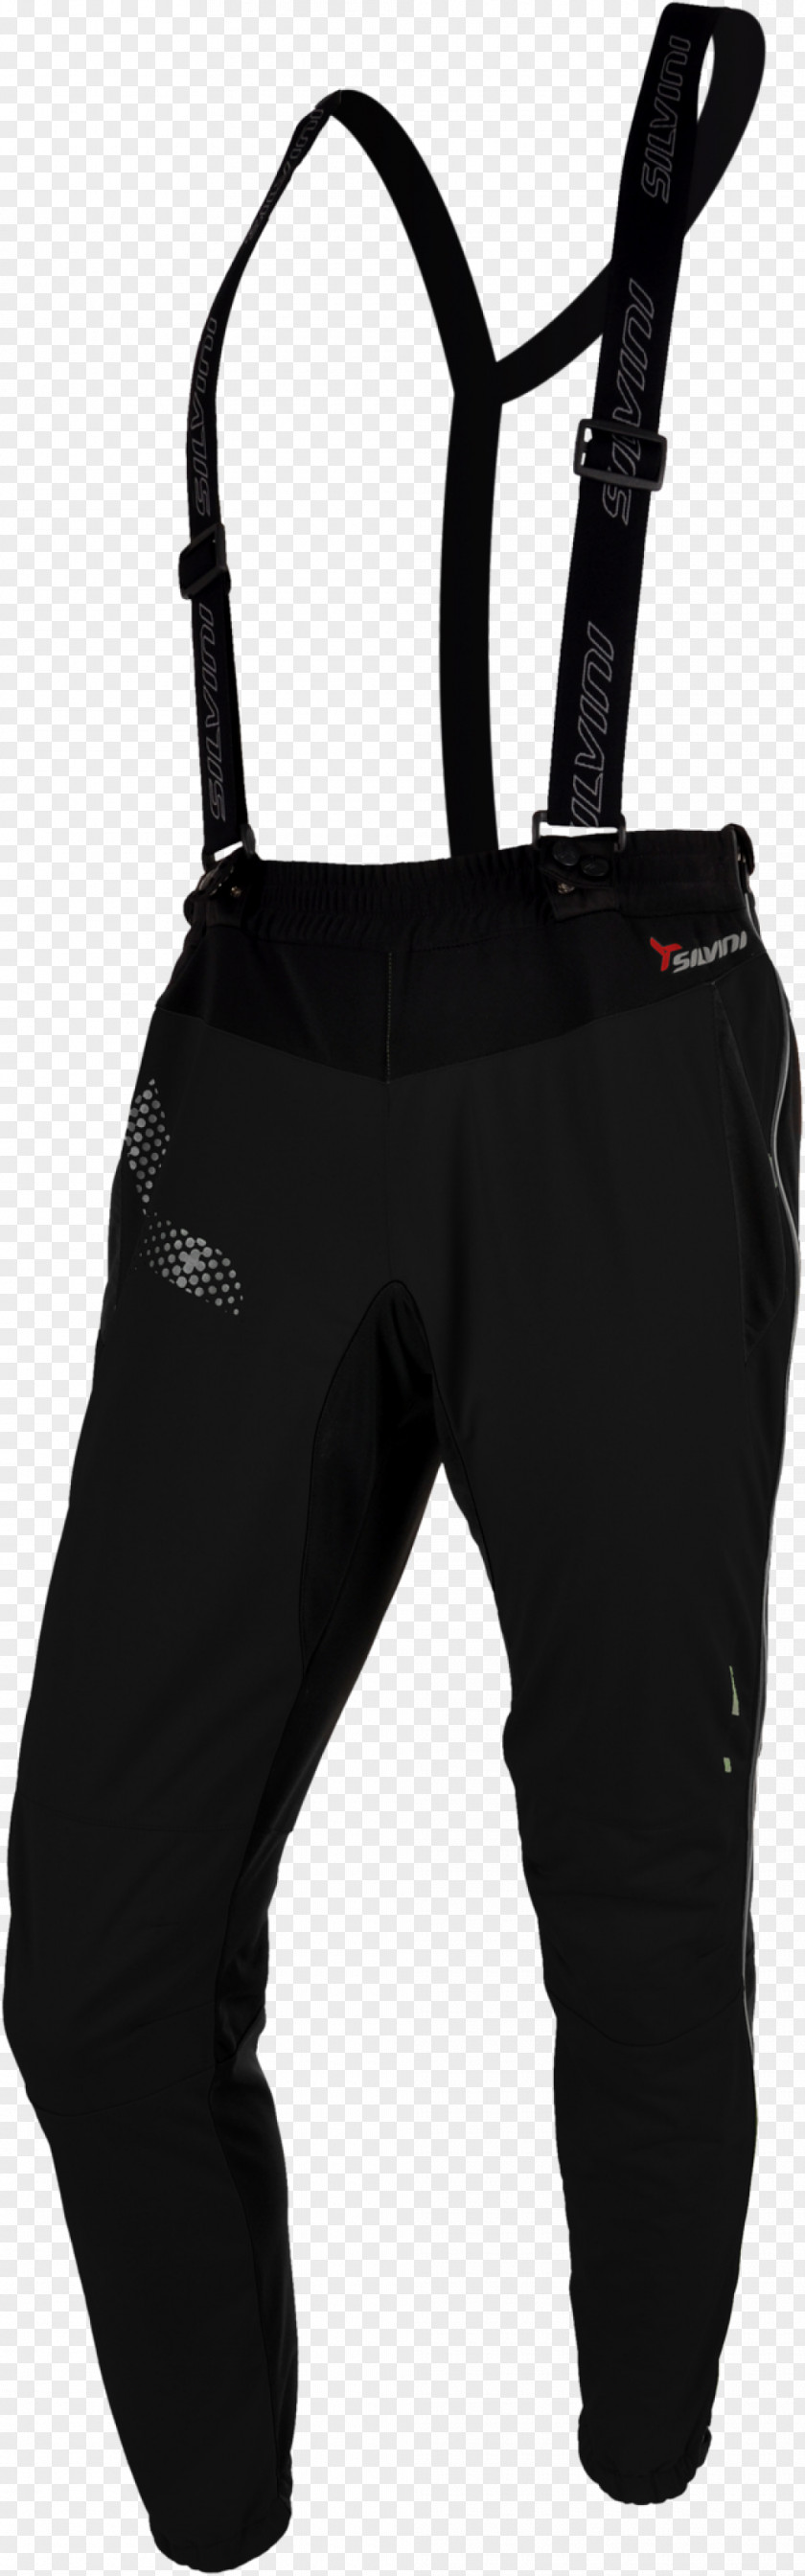 Cycling Pants Clothing Sport Amazon.com Softshell PNG